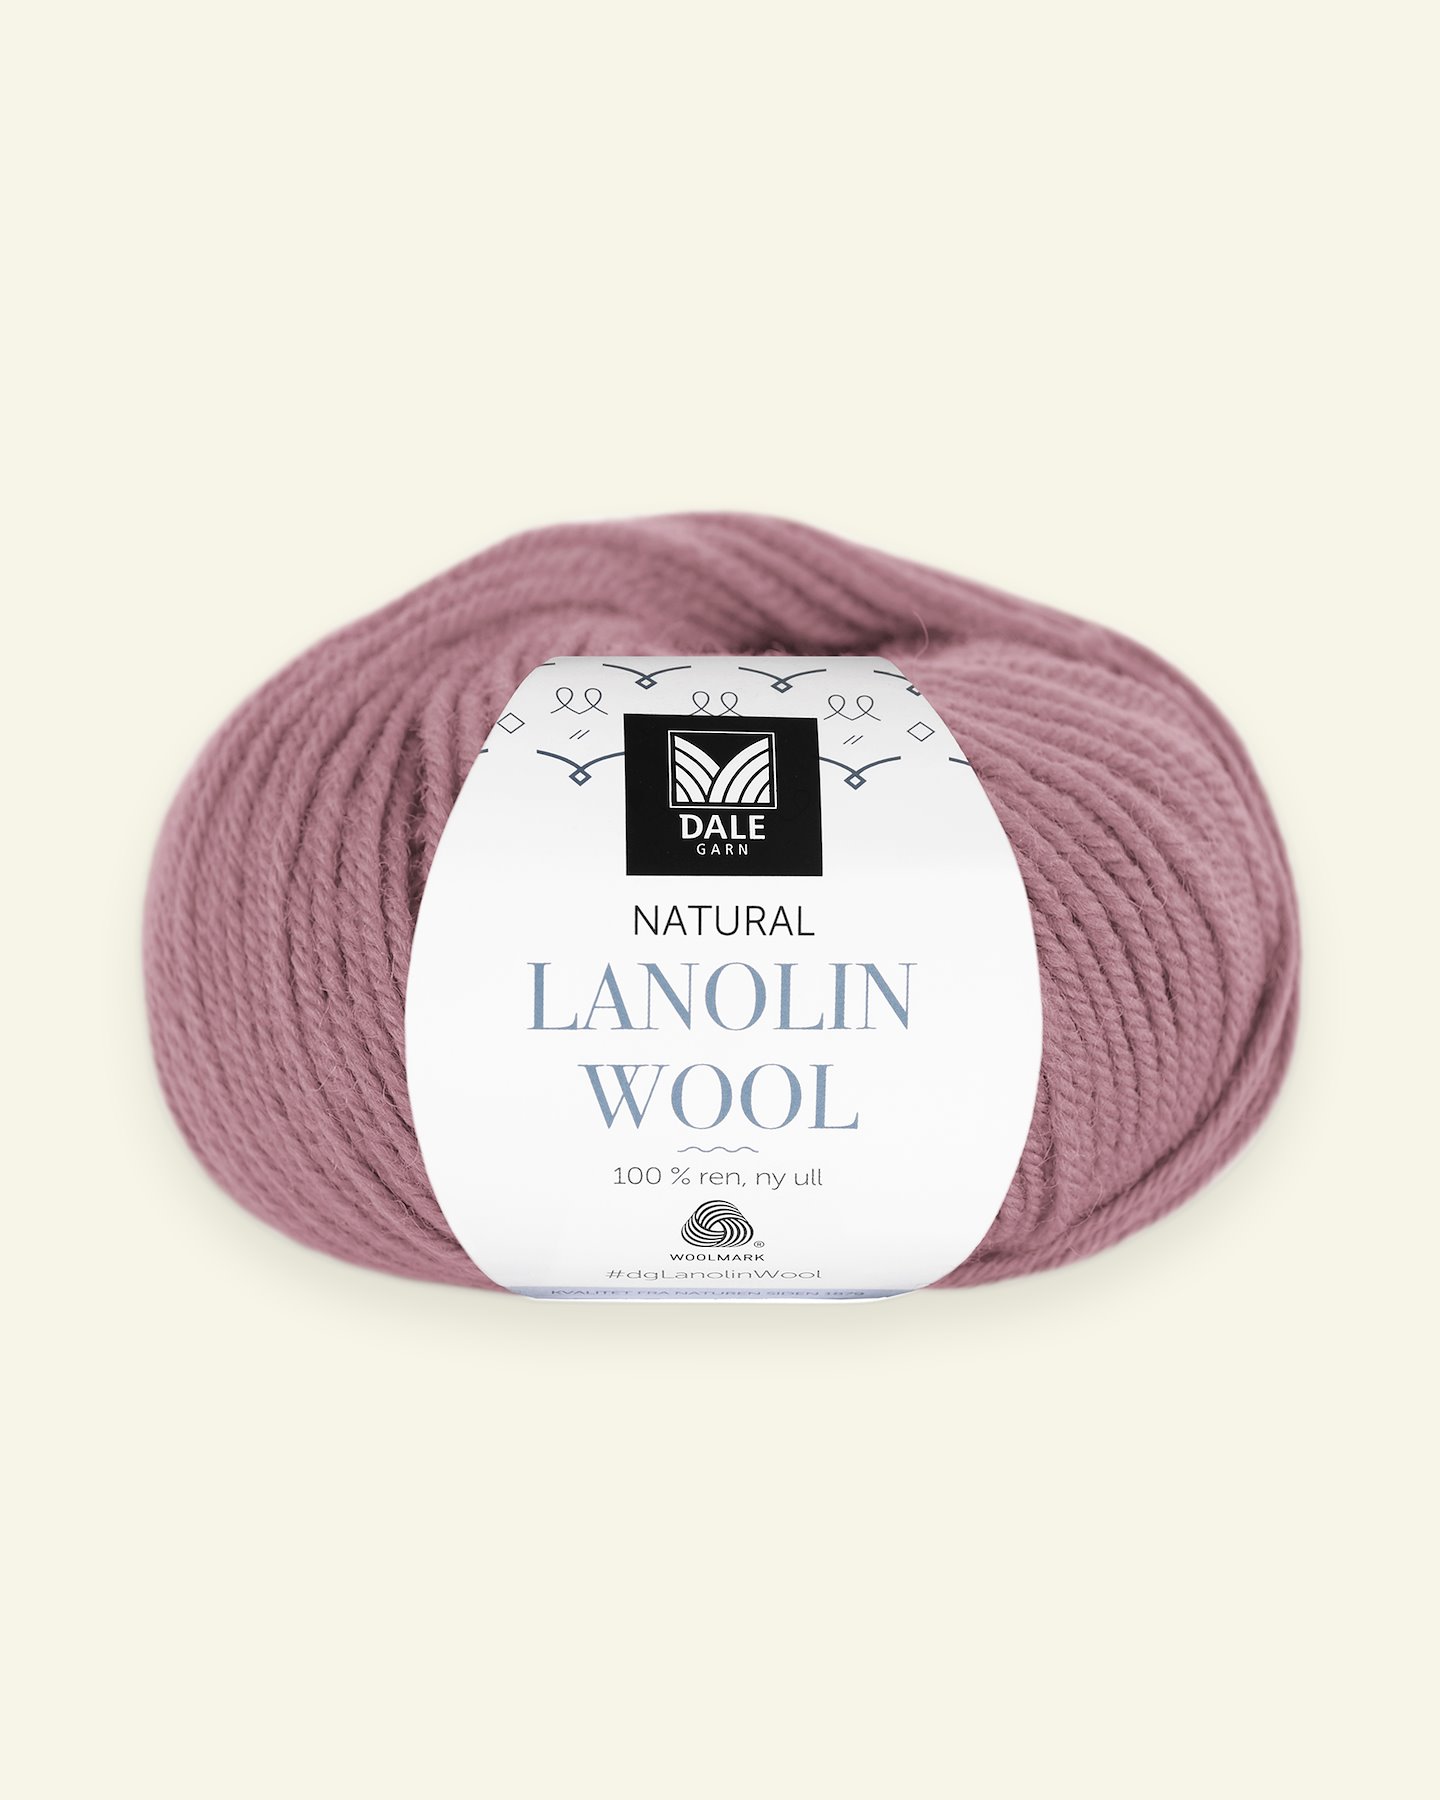 Dale Garn, 100% uldgarn "Lanolin Wool", gammel rosa (1459) 90000305_pack